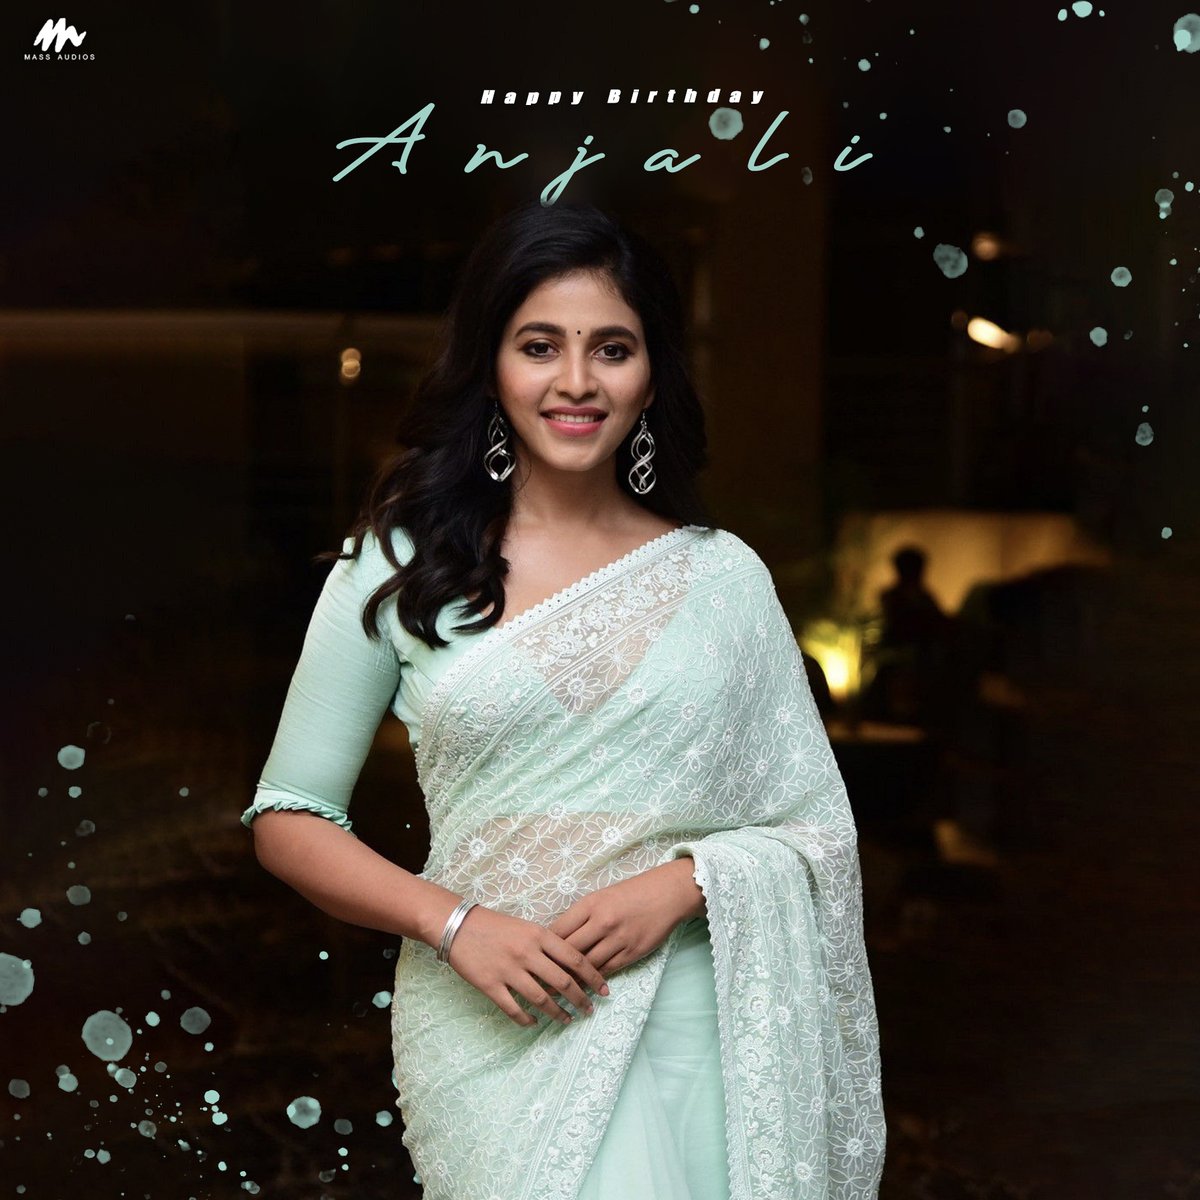 Wishing @yoursanjali  A Very Happy Birthday  #happybirthdayanjali #hbdanjali #khafaentertainment Link  

1 * Best of Anjali Songs  - youtu.be/hFQitb-M55o

2 * Karungali - Tamil Full Movie - youtu.be/aN5xvoAyt0k